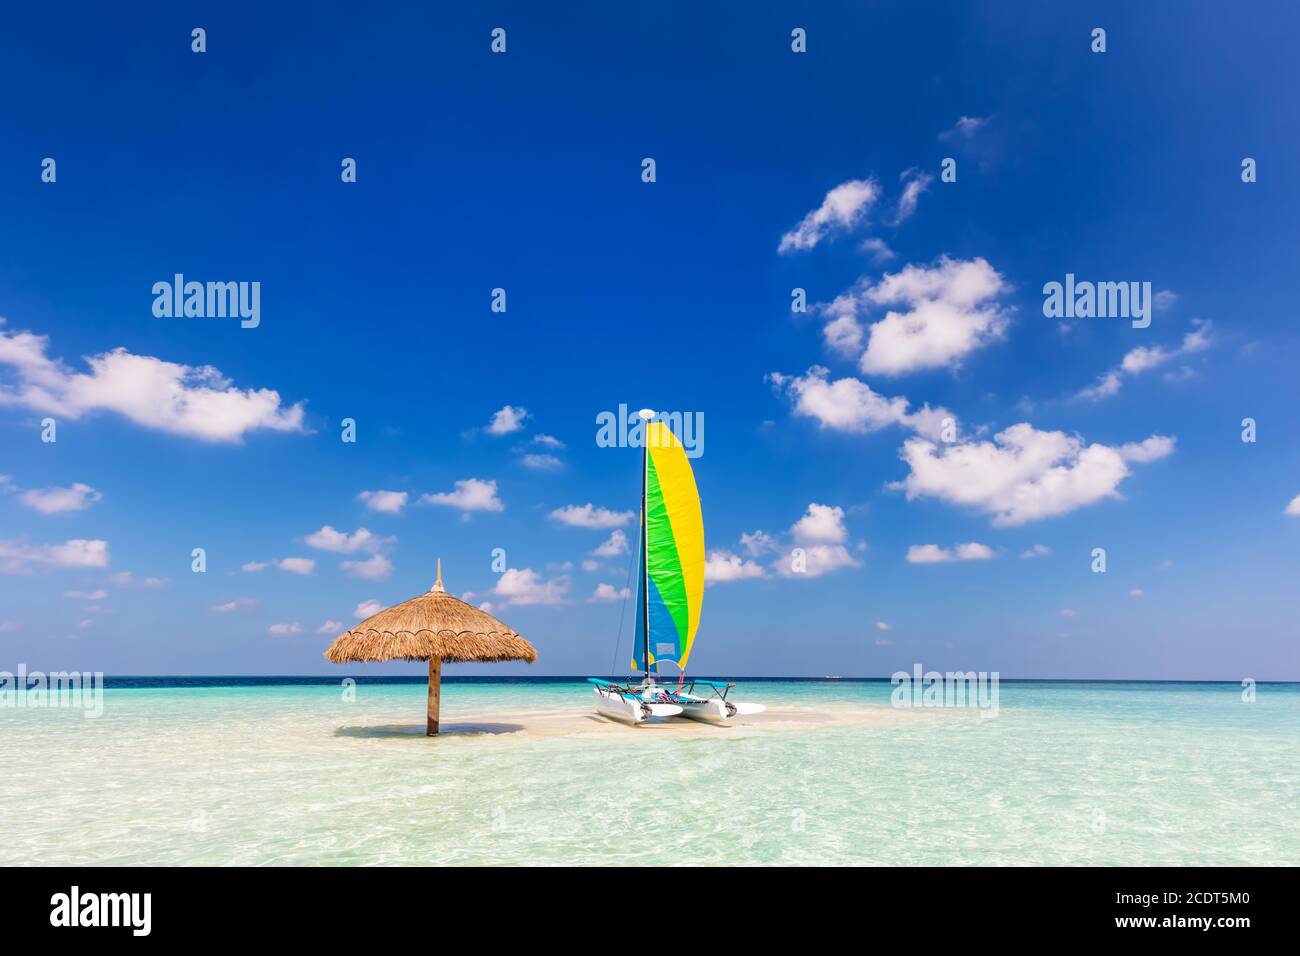 Catamaran on tropical sandbank island with sunshade, Maldives. Indian Ocean Stock Photo